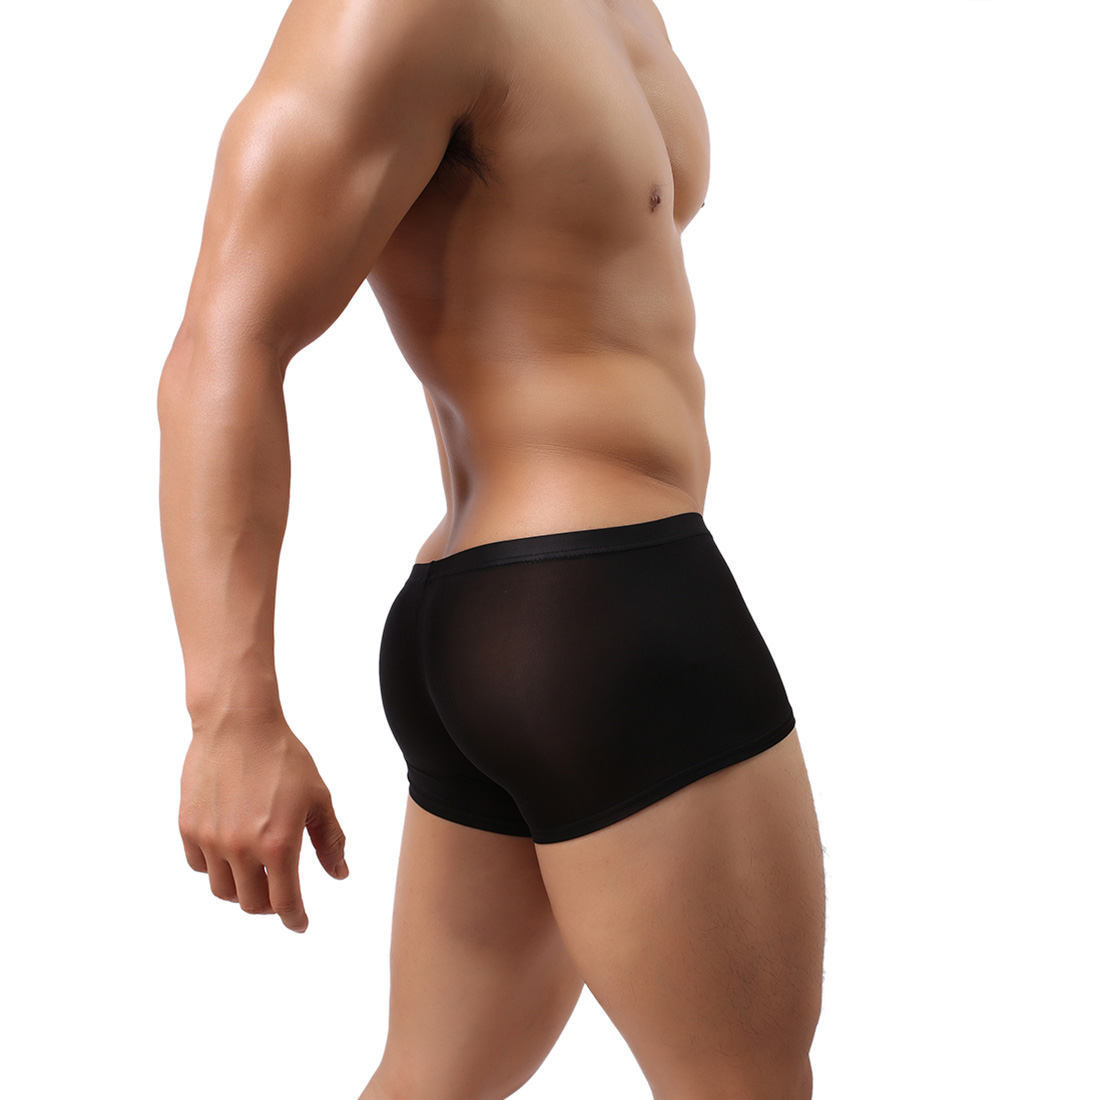 Men's Sexy Lingerie Underwear See-through Boxer Shorts Underpants WH42 Black L